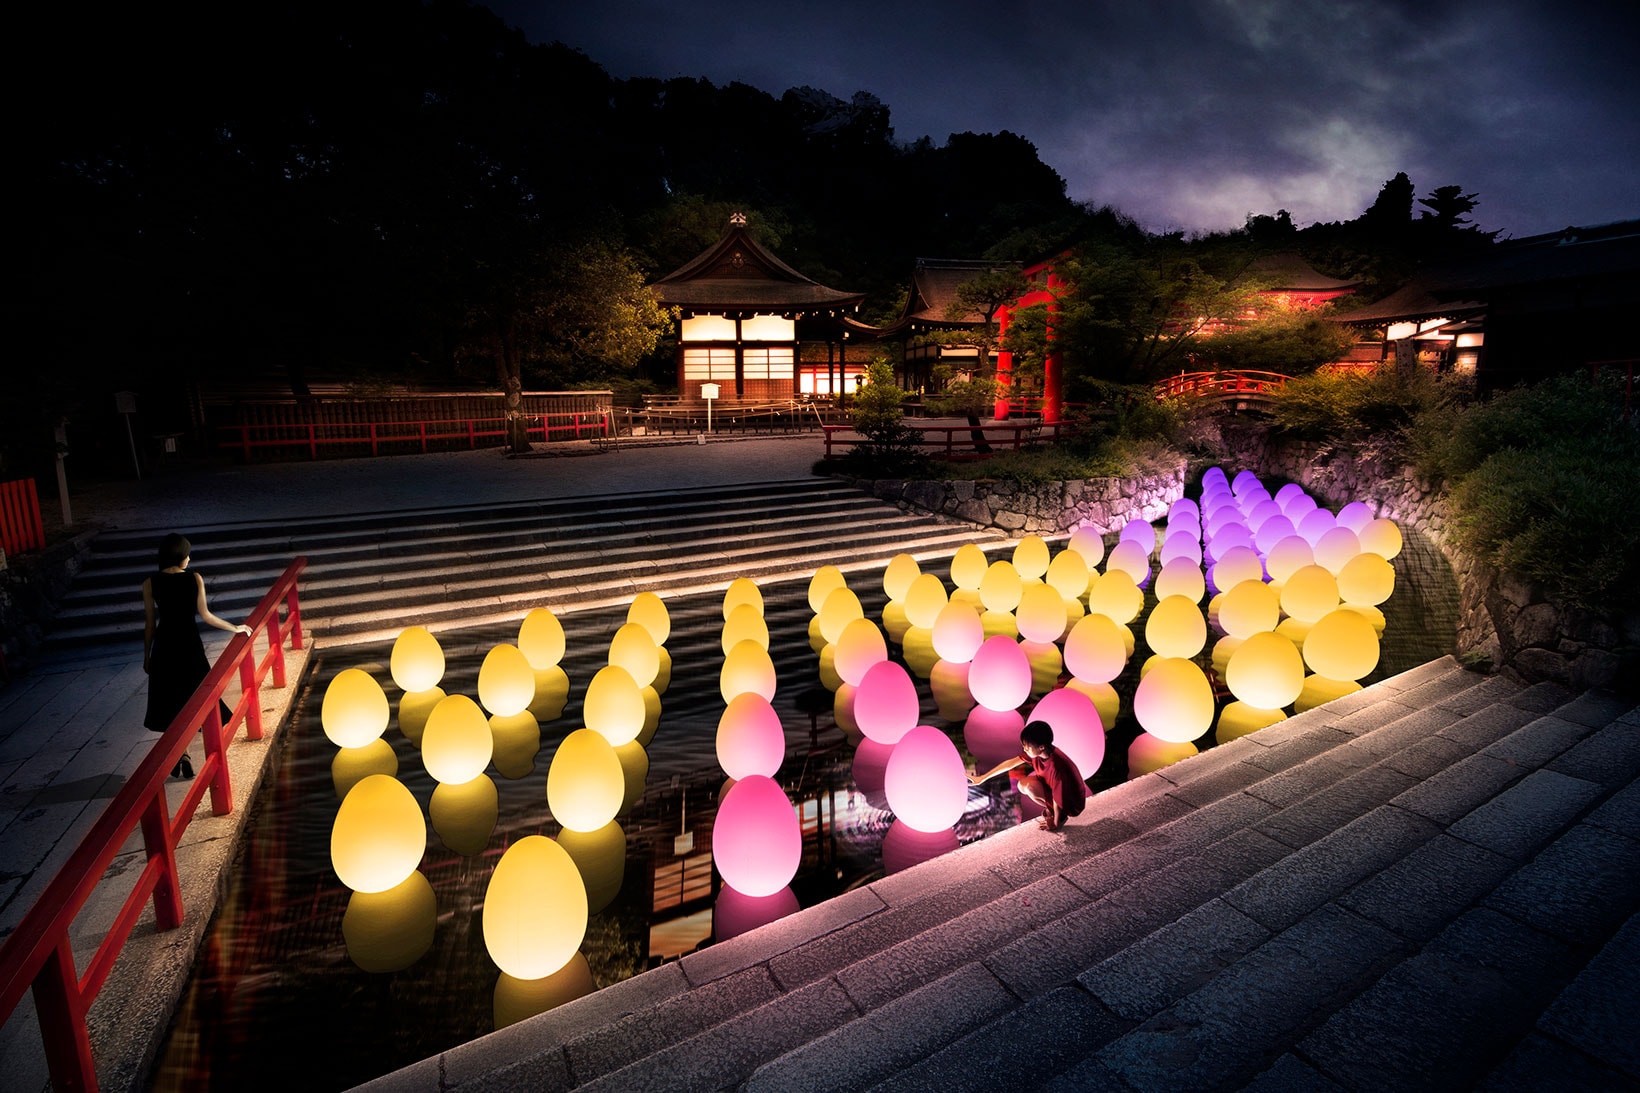 teamlab digitized forest kyoto world heritage site shimogamo shrine art exhibition museums japan 